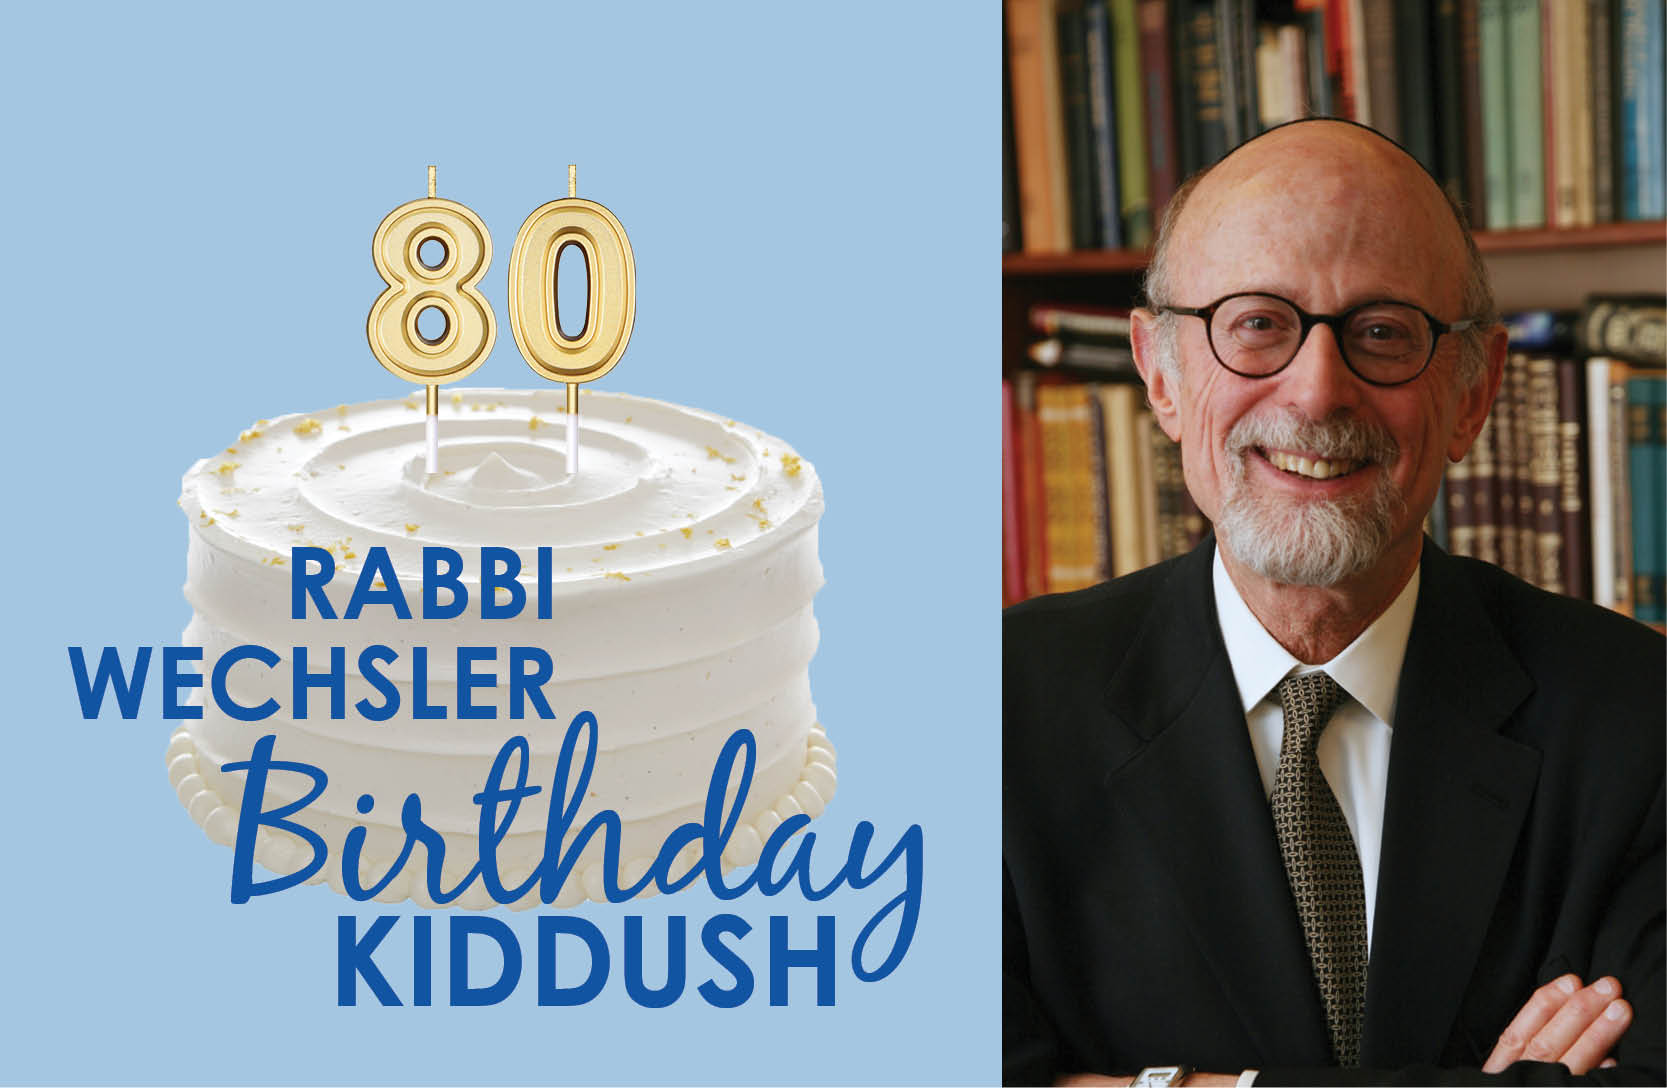 Kiddush to Celebrate Rabbi Wechsler's 80th Birthday